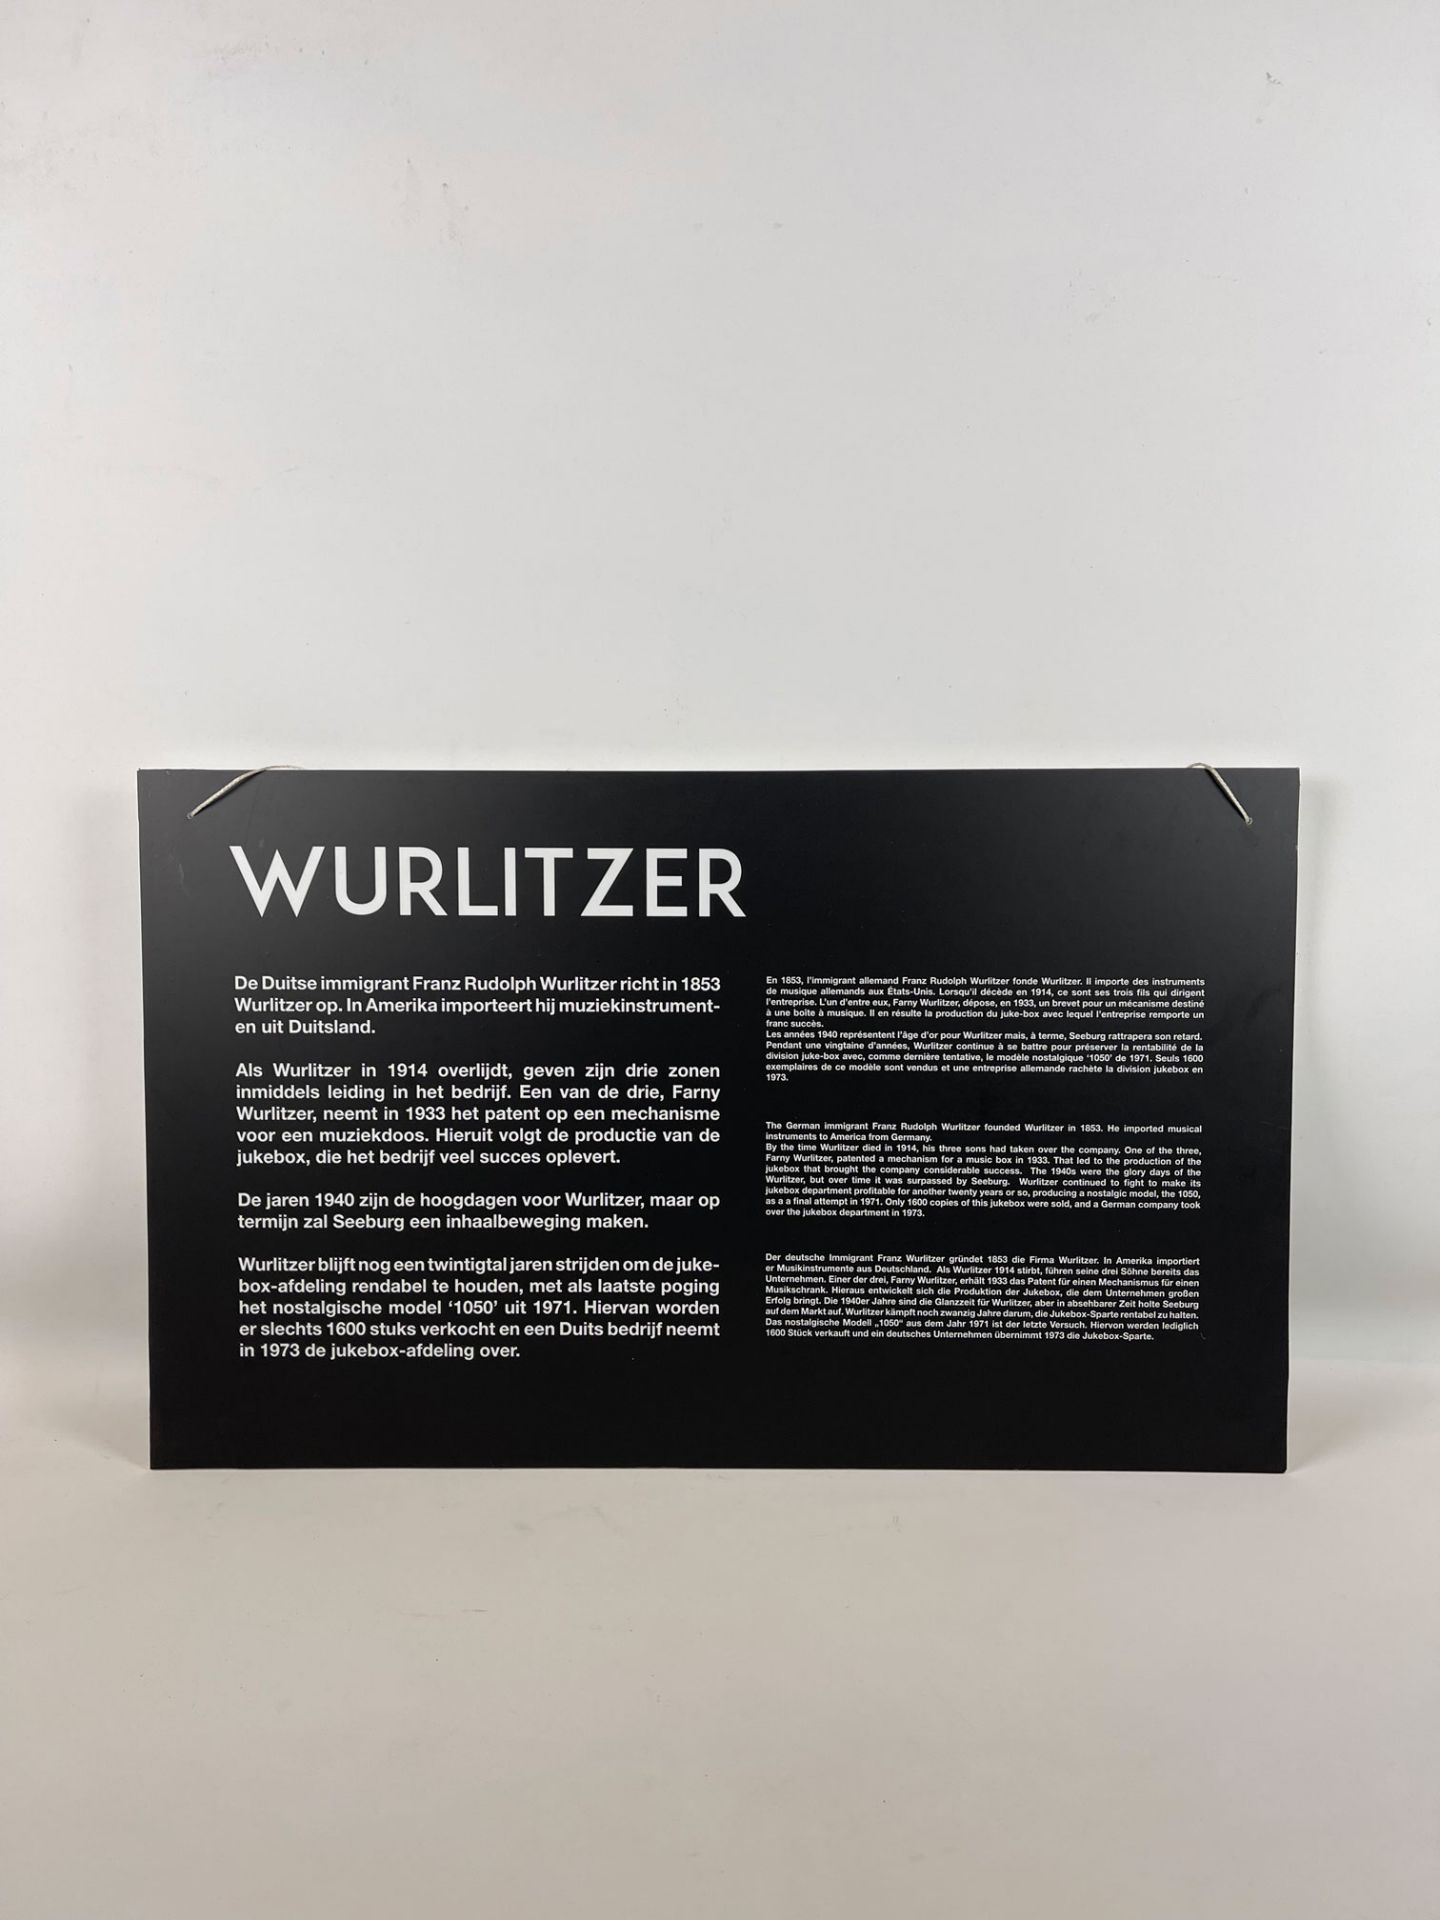 Multiple Language Info Sign from the Museum De Panne Wurlitzer Jukebox Section - Bild 2 aus 5